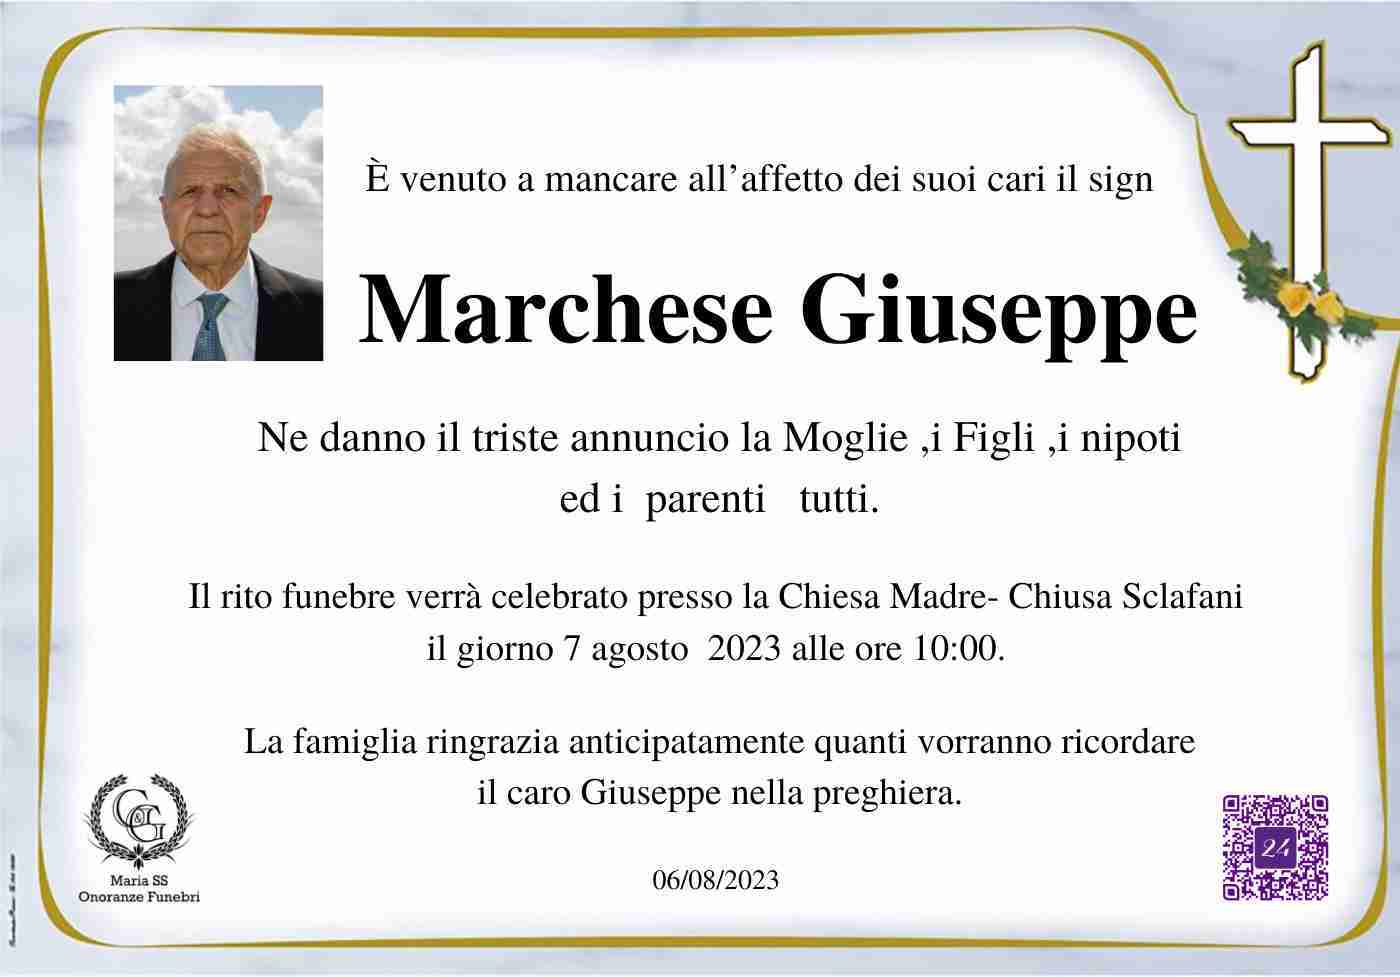 Giuseppe Marchese